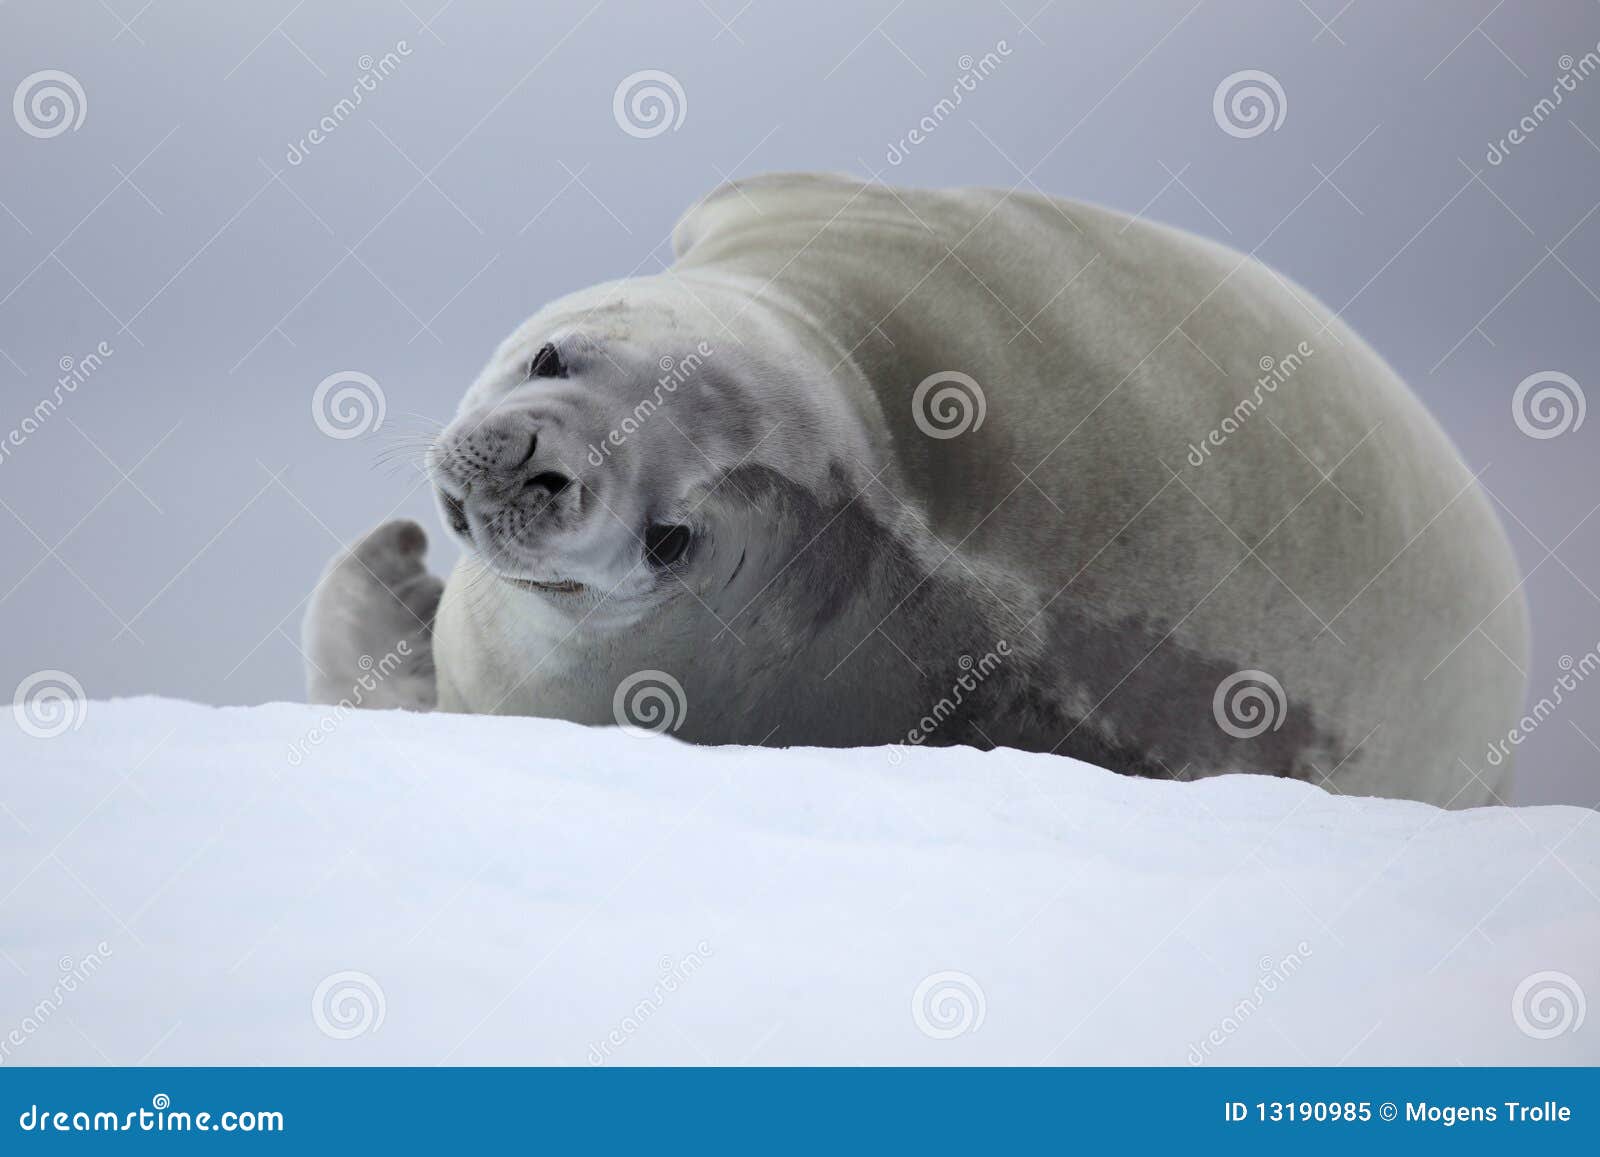 crabeater seal resting on ice floe, antarctica